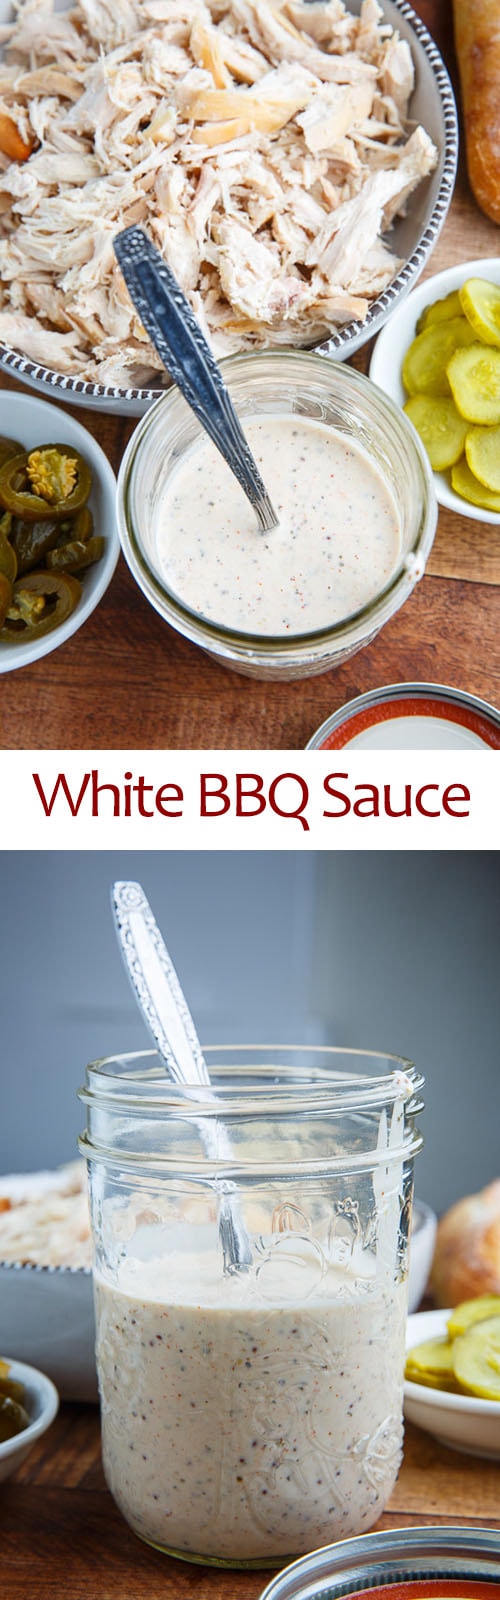 White BBQ Sauce